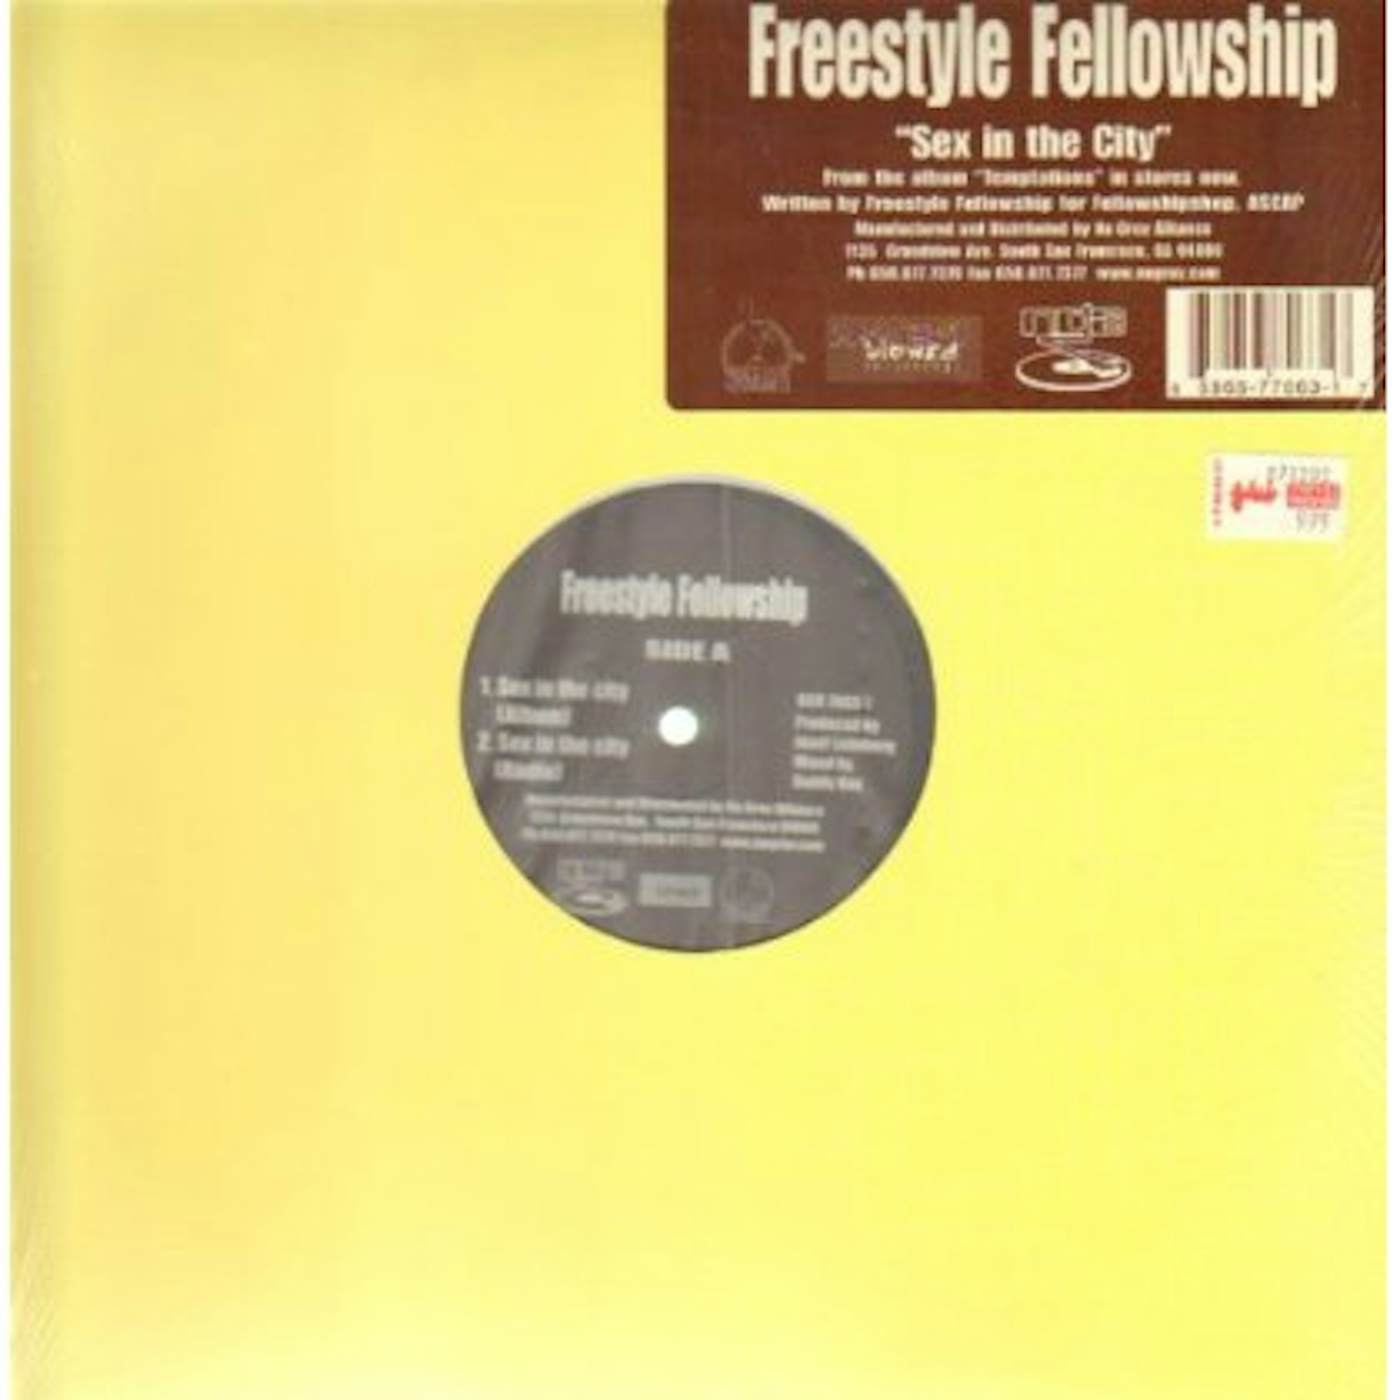 FREESTYLE FELLOWSHIP - INNERCITY GRIOTS - Music On Vinyl